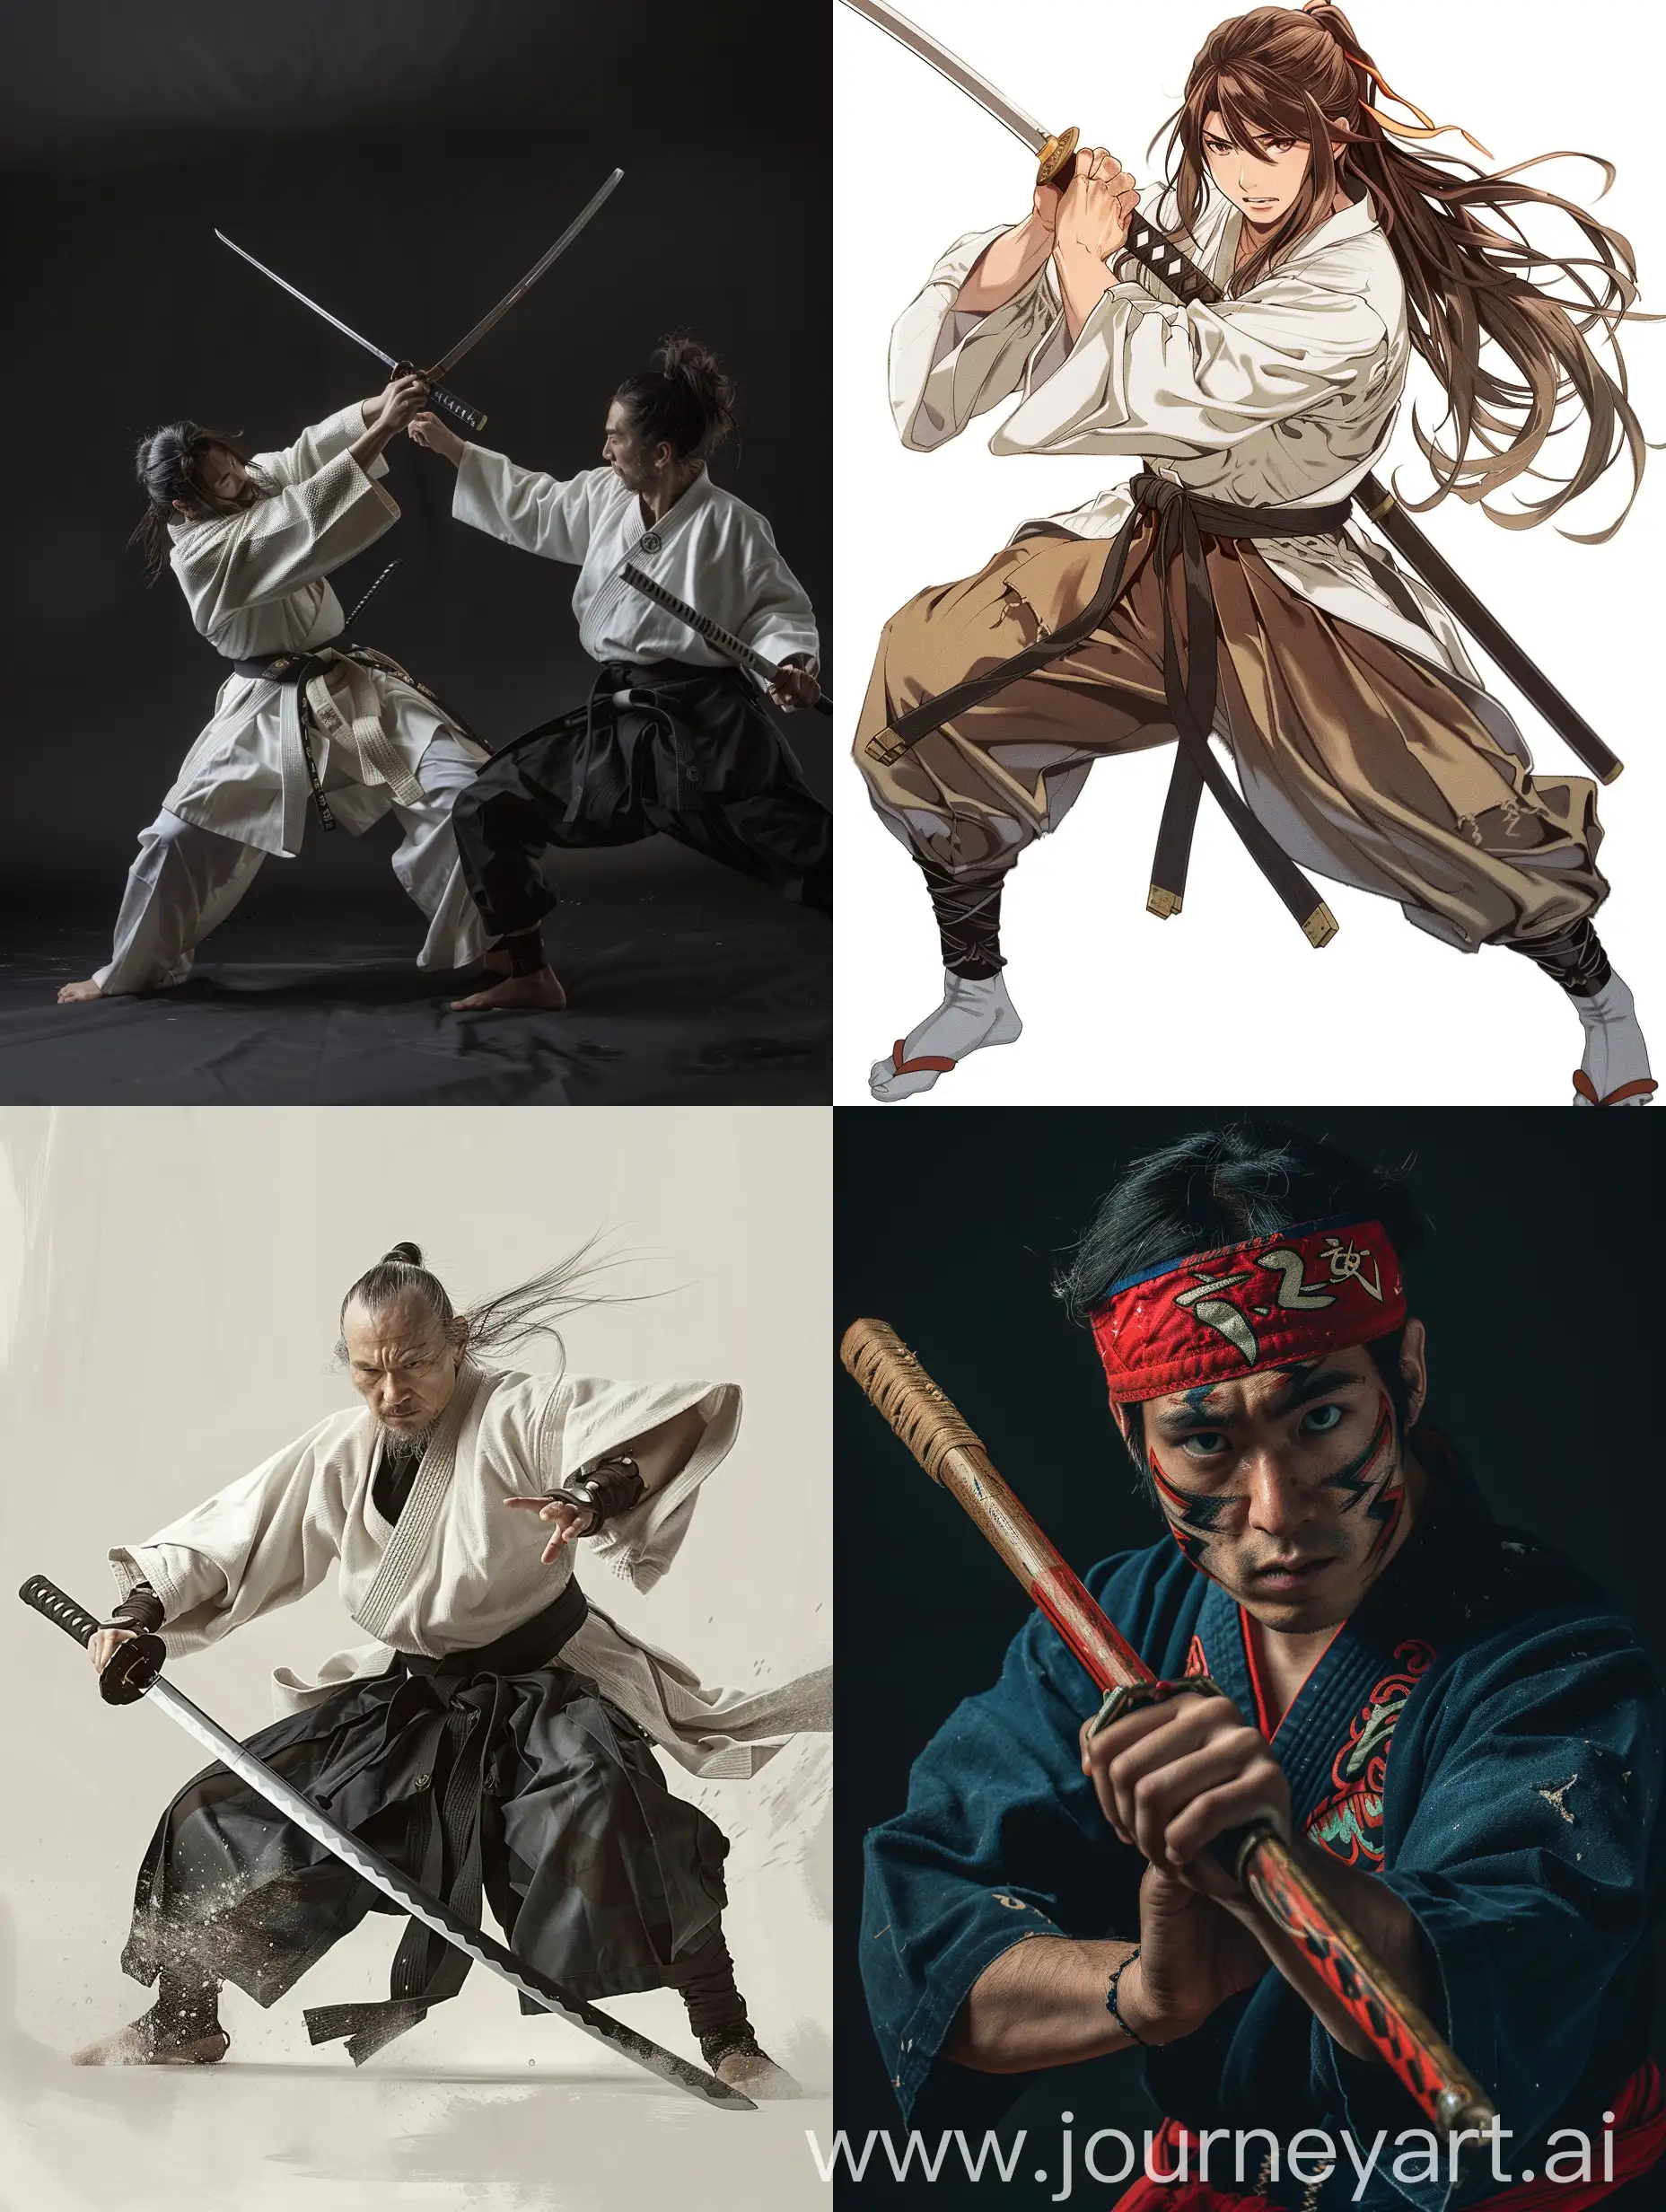 Ryu-Hoshi-and-Ken-Master-Engage-in-Intense-Combat-in-Niji-6-Arena